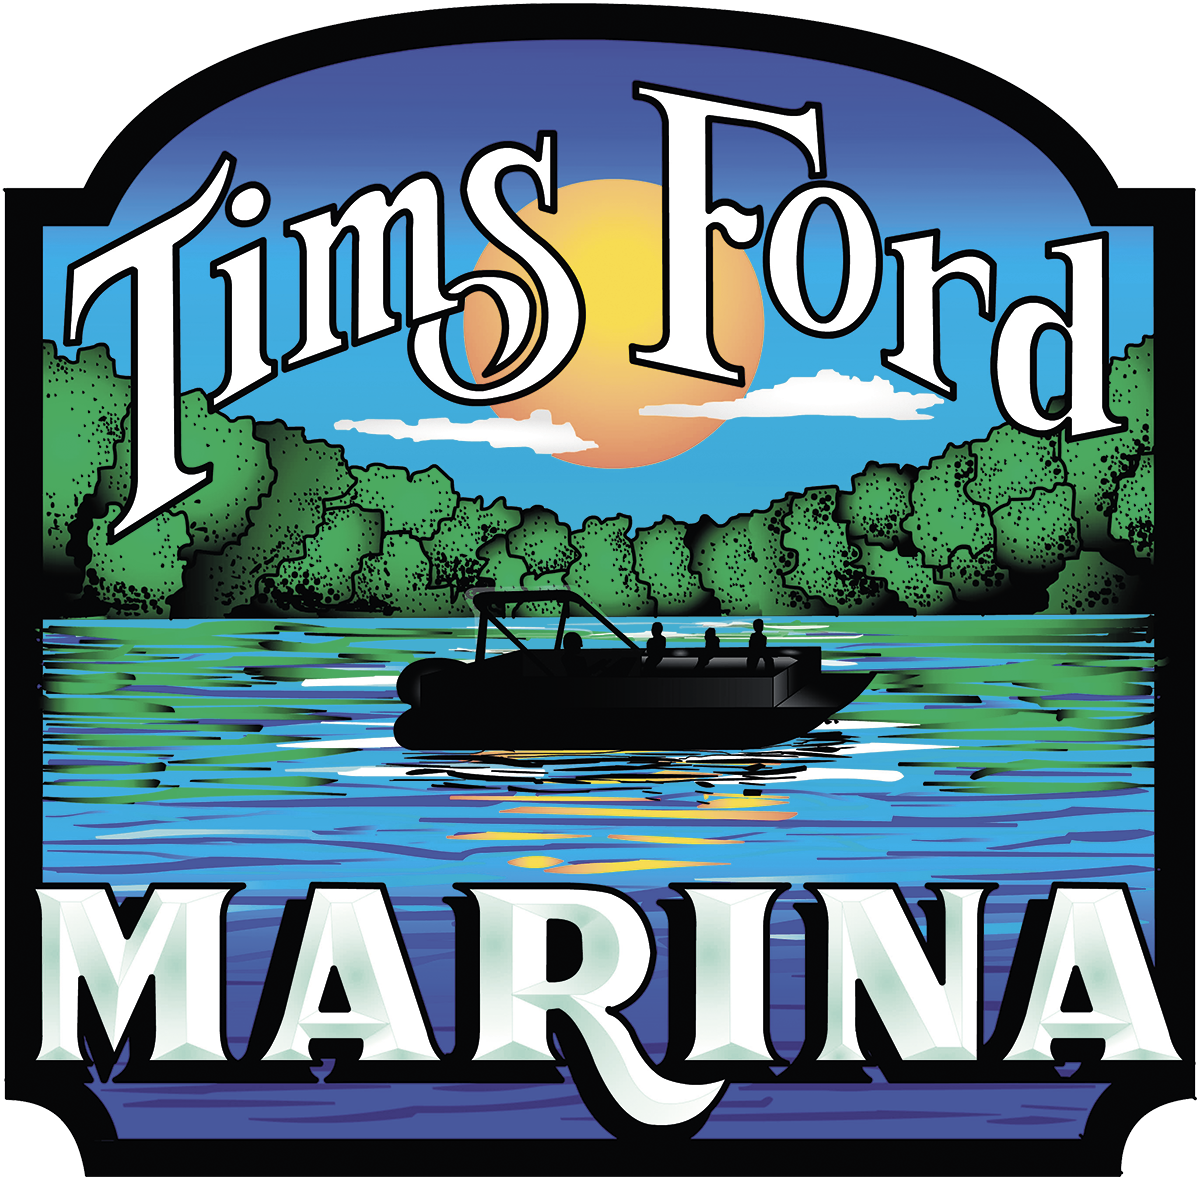 Tims Ford Marina and Resort